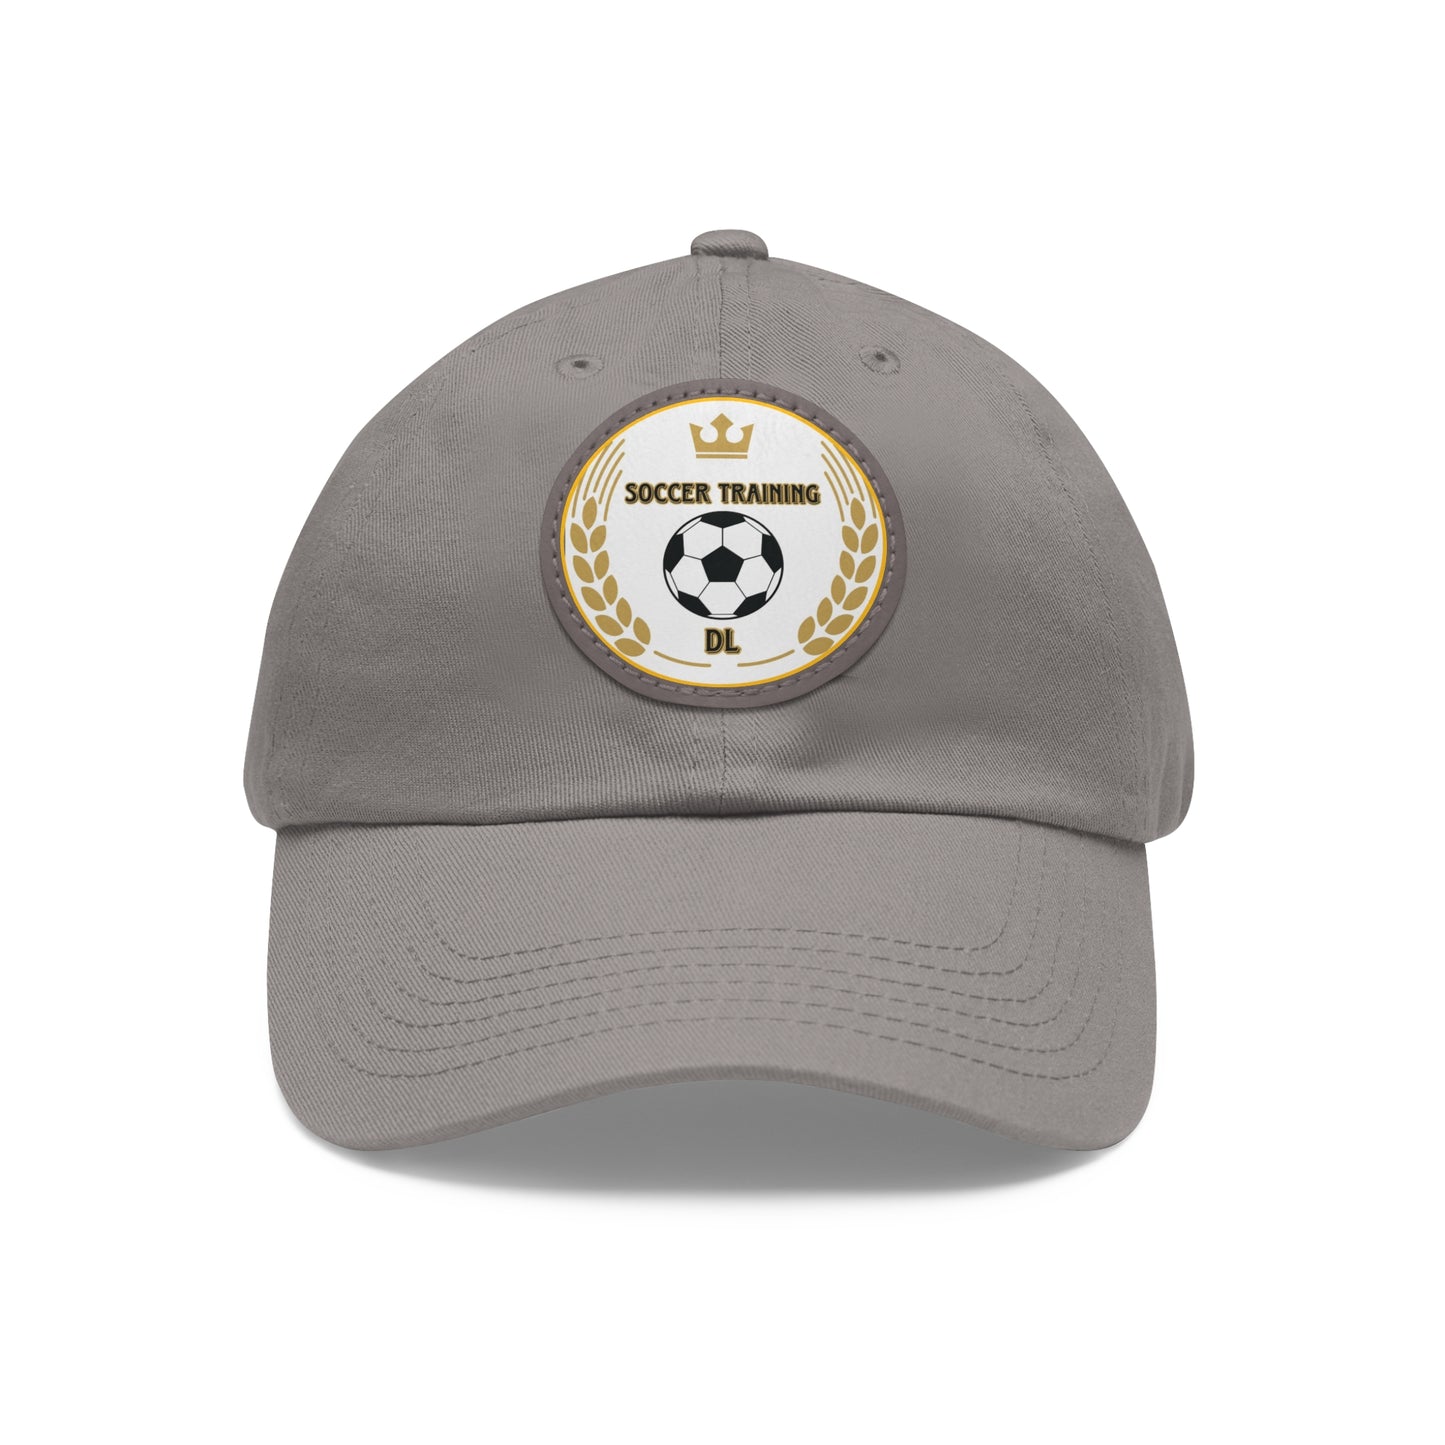 DL Soccer Training Hat